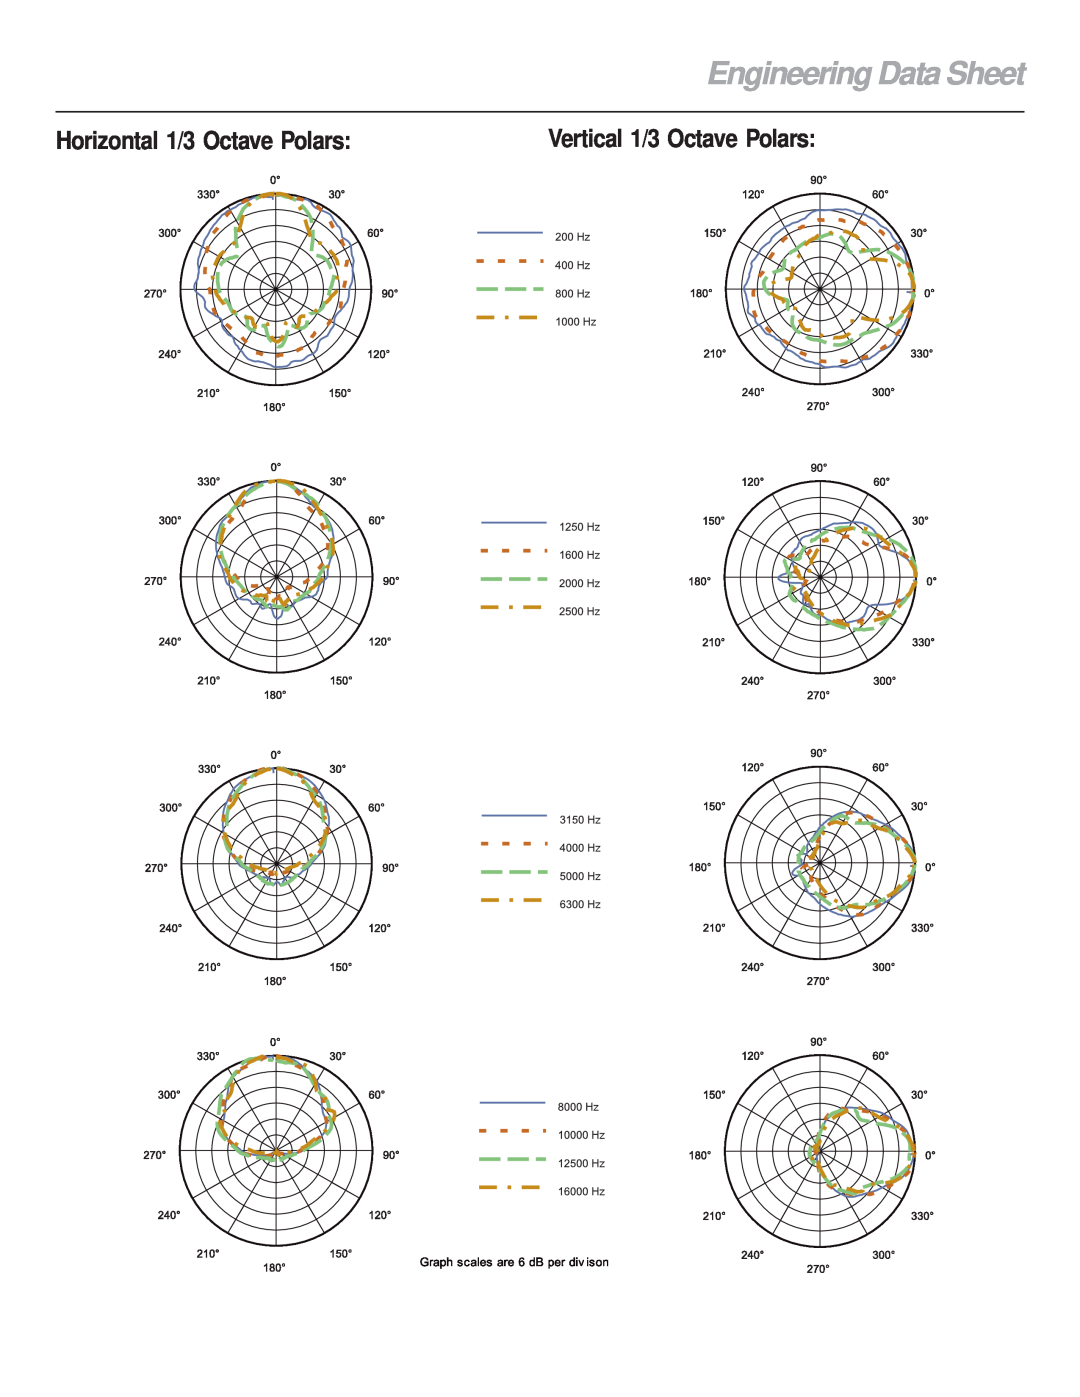 Electro-Voice XI-1122MHA/64F Engineering Data Sheet, Horizontal 1/3 Octave Polars, Vertical 1/3 Octave Polars 